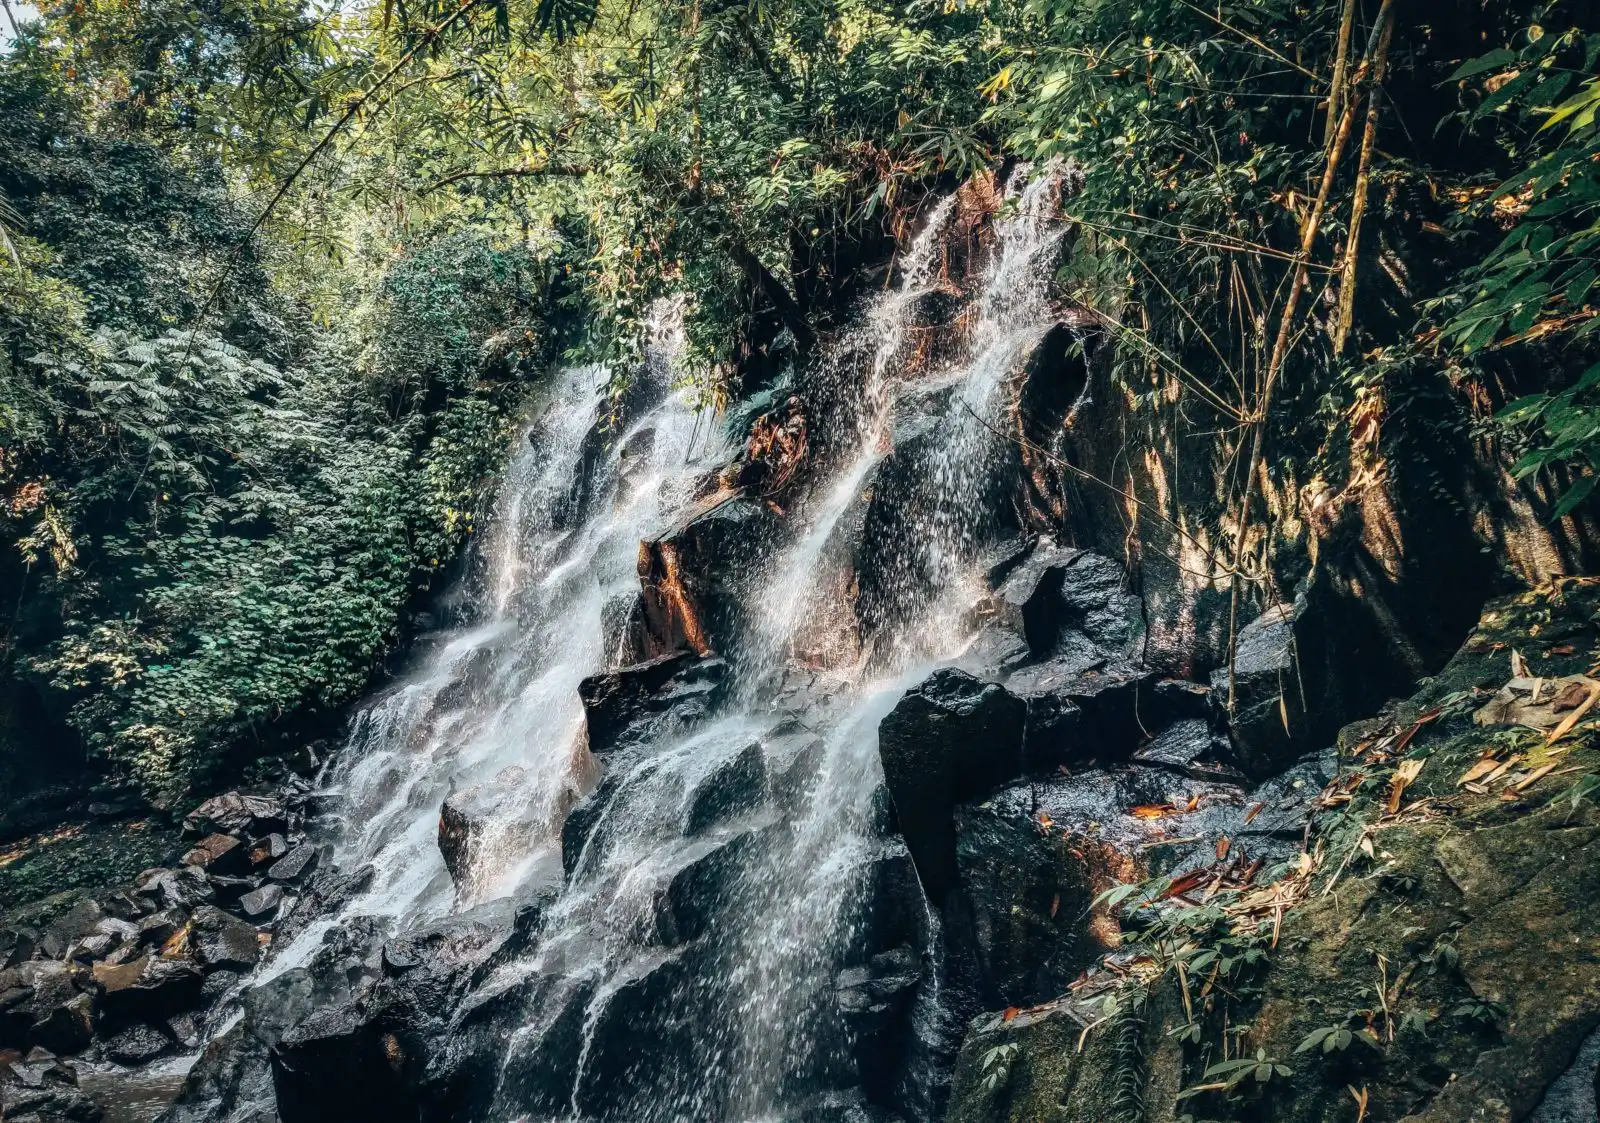 Ubud Waterfall - Kanto Lampo Waterfall